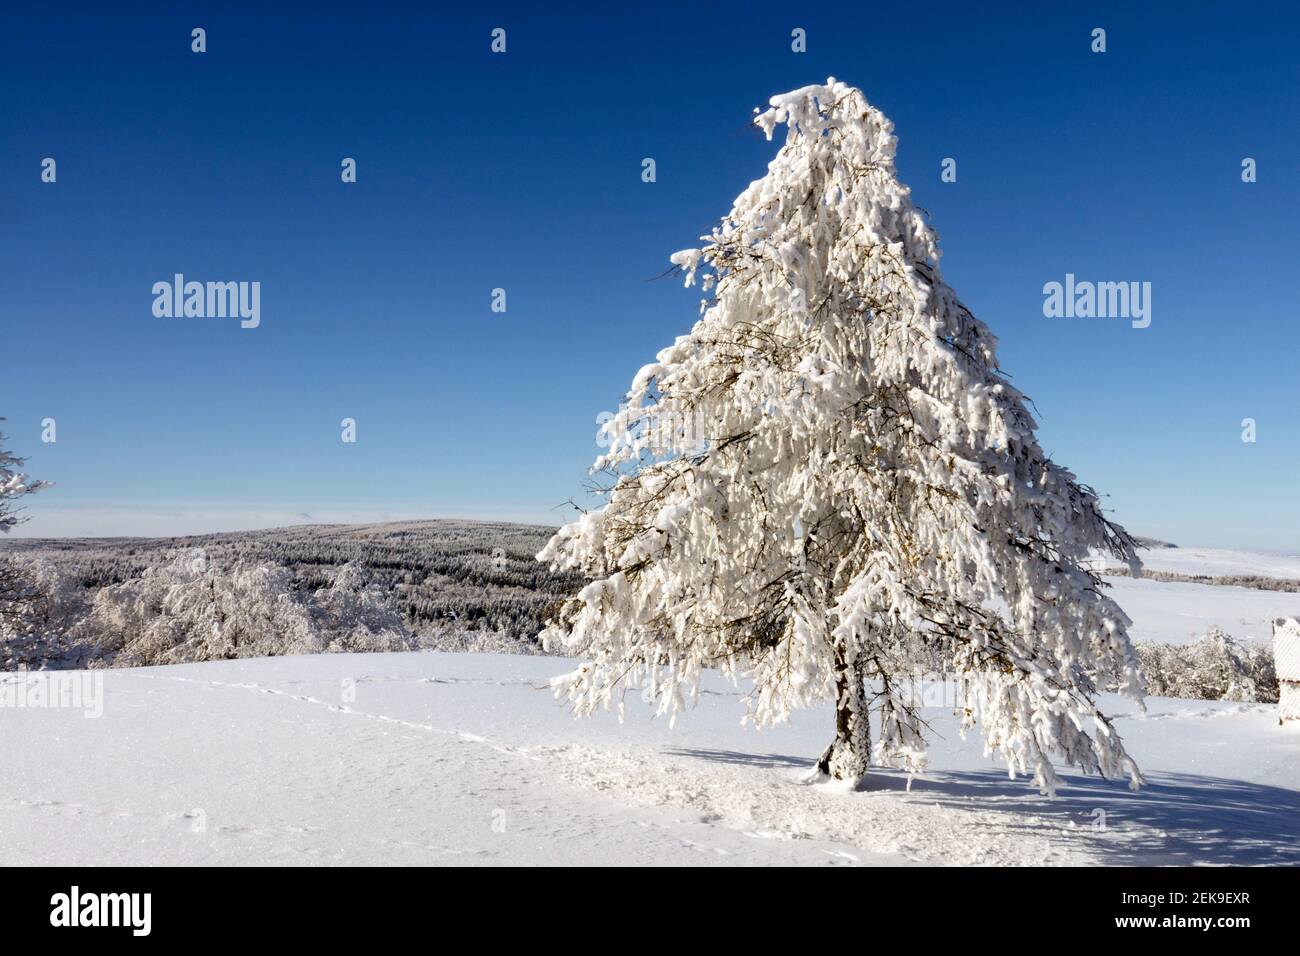 Paesaggio panoramico coperto di neve albero di neve ceca inverno neve montagne, neve montagna cielo blu Foto Stock